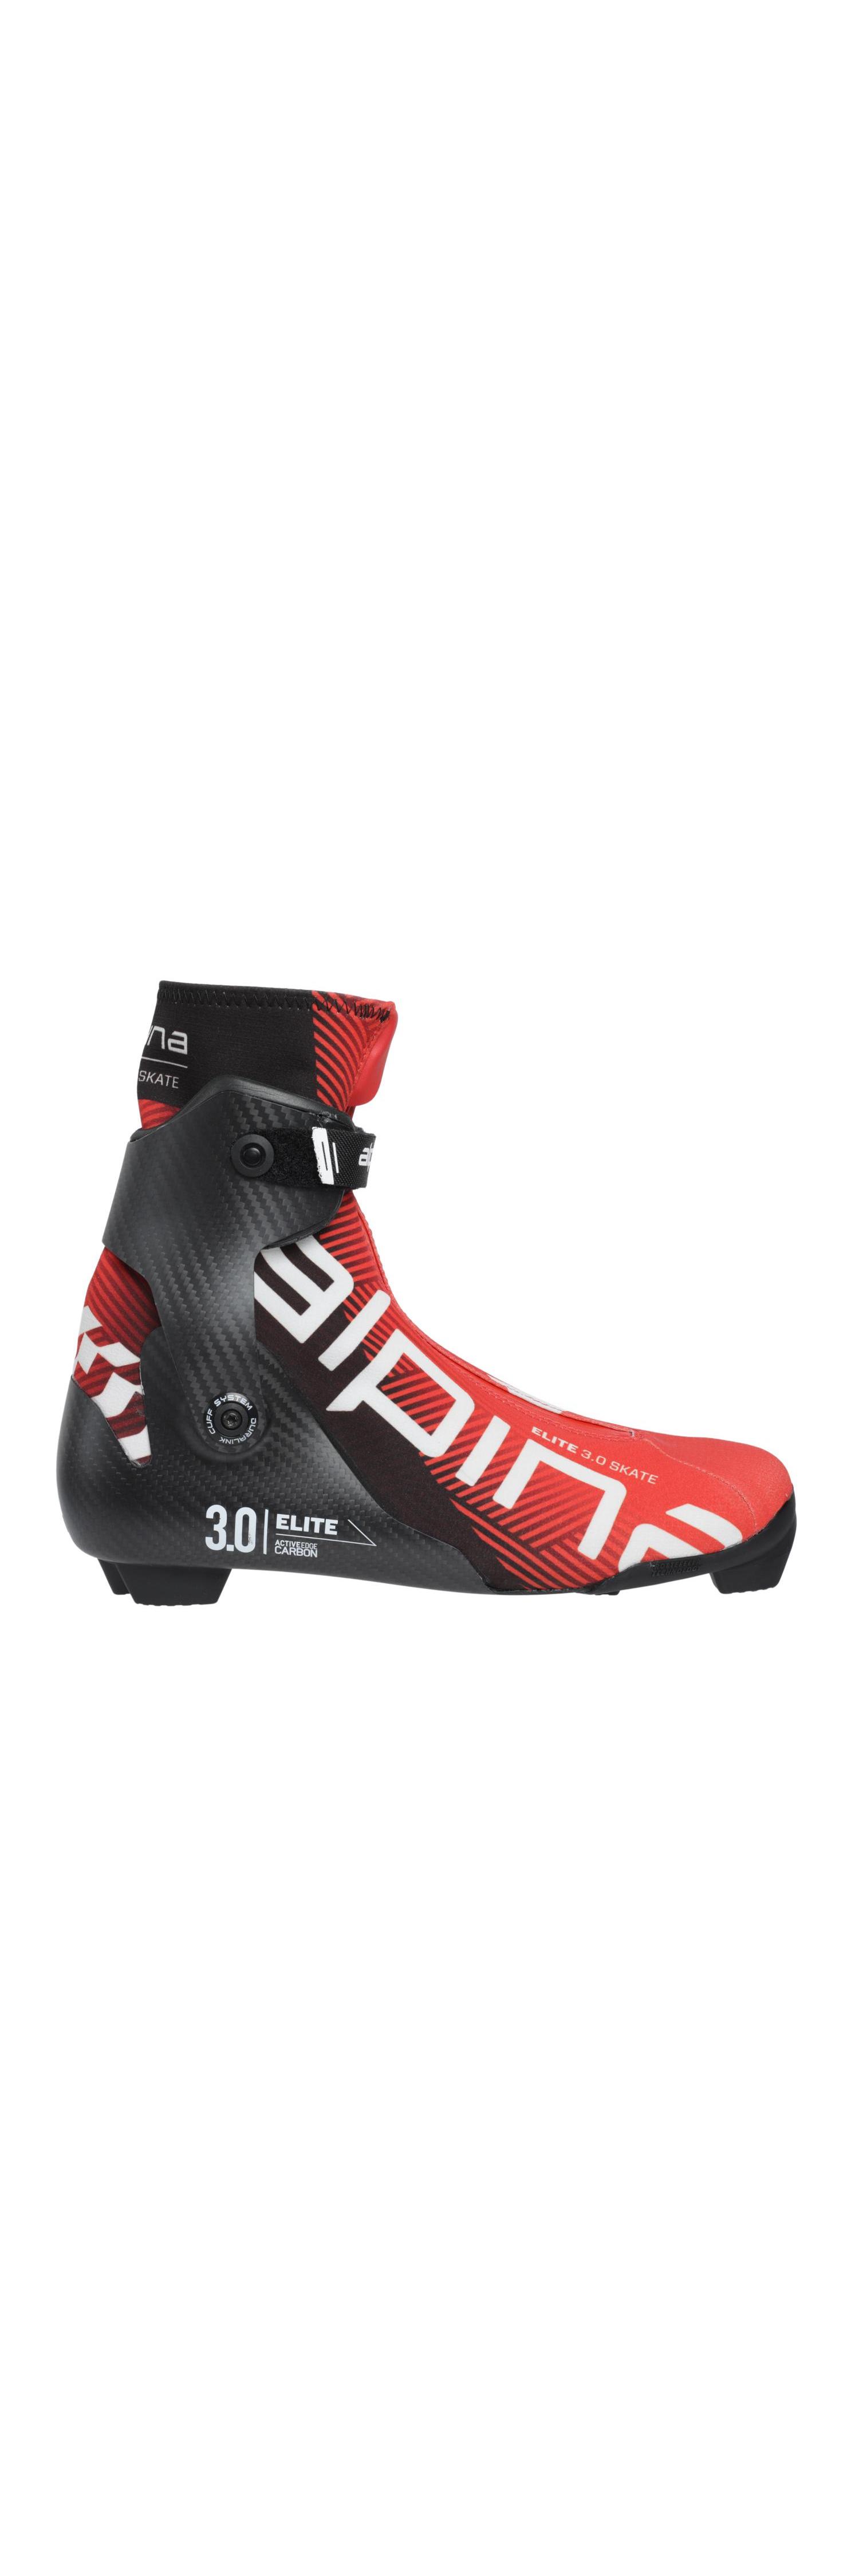 Лыжные Ботинки Alpina E30 Sk Red/Black/White (Eur:45)